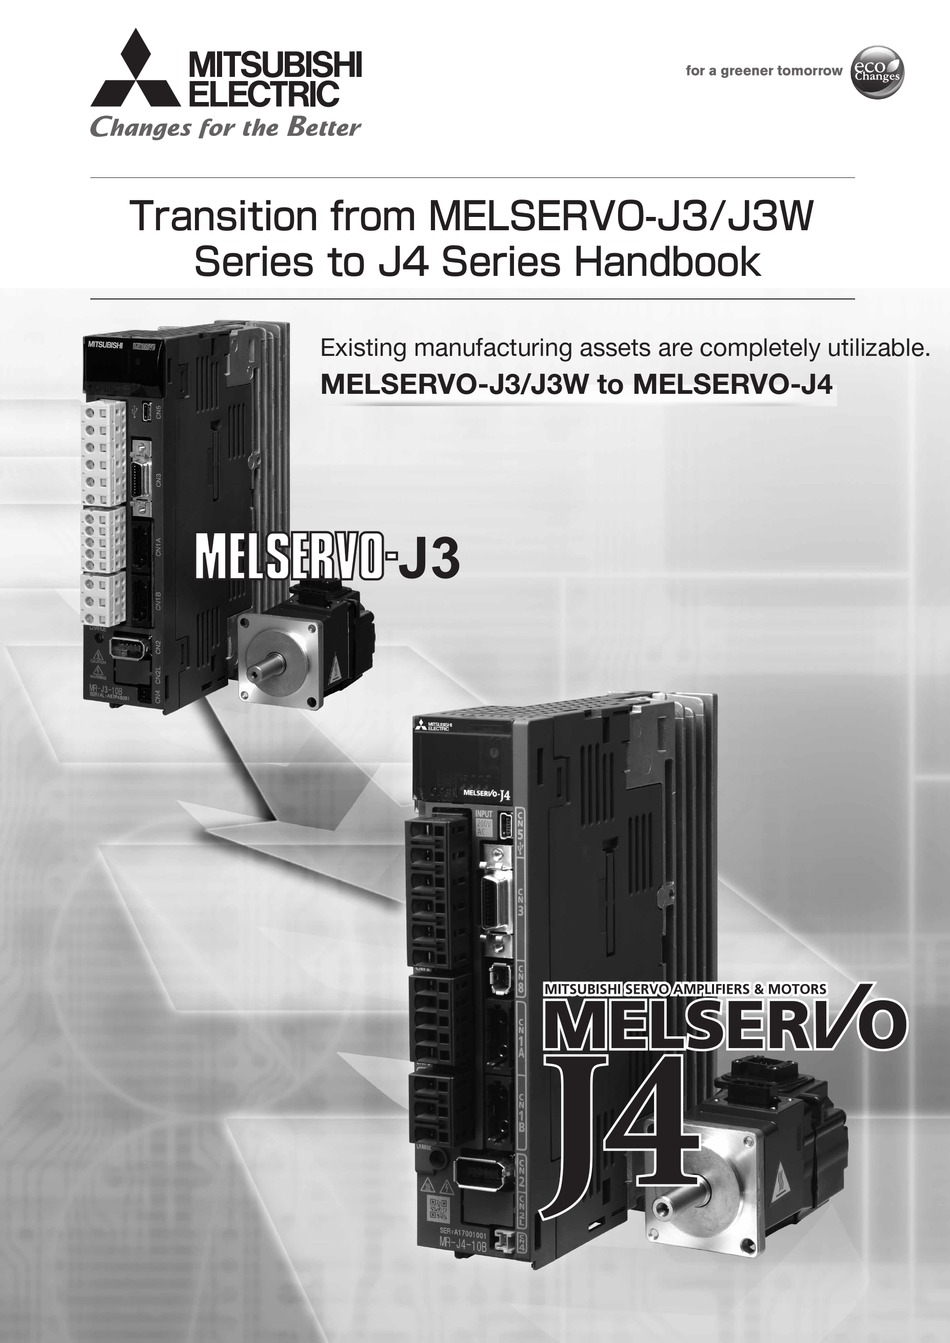 MITSUBISHI ELECTRIC MELSERVO-J4 SERIES TRANSITION HANDBOOK Pdf Download